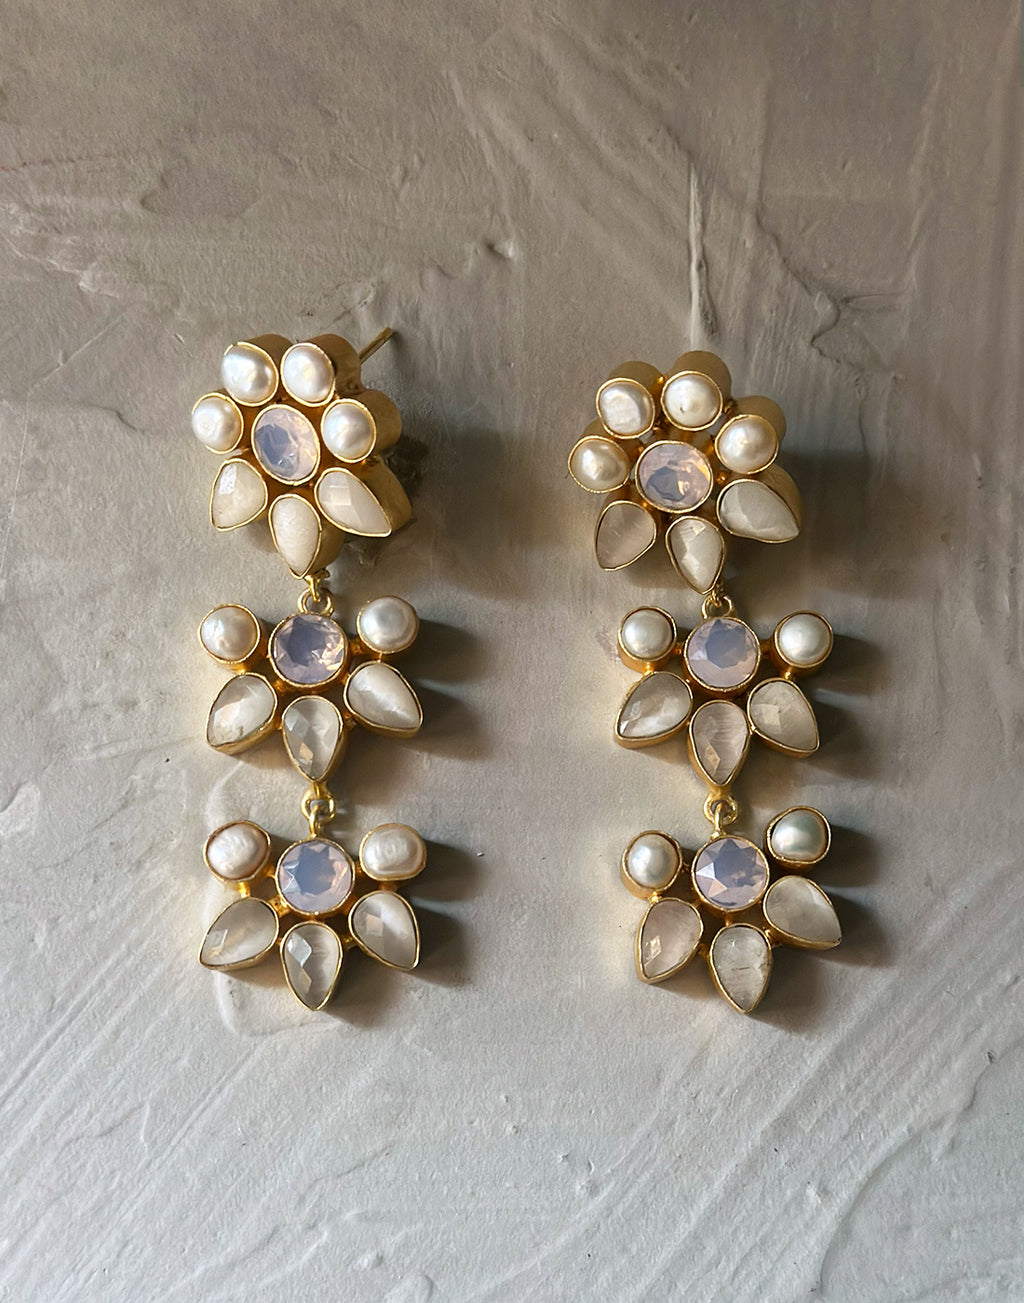 White Flower Trio Earrings - Statement Earrings - Gold-Plated & Hypoallergenic Jewellery - Made in India - Dubai Jewellery - Dori